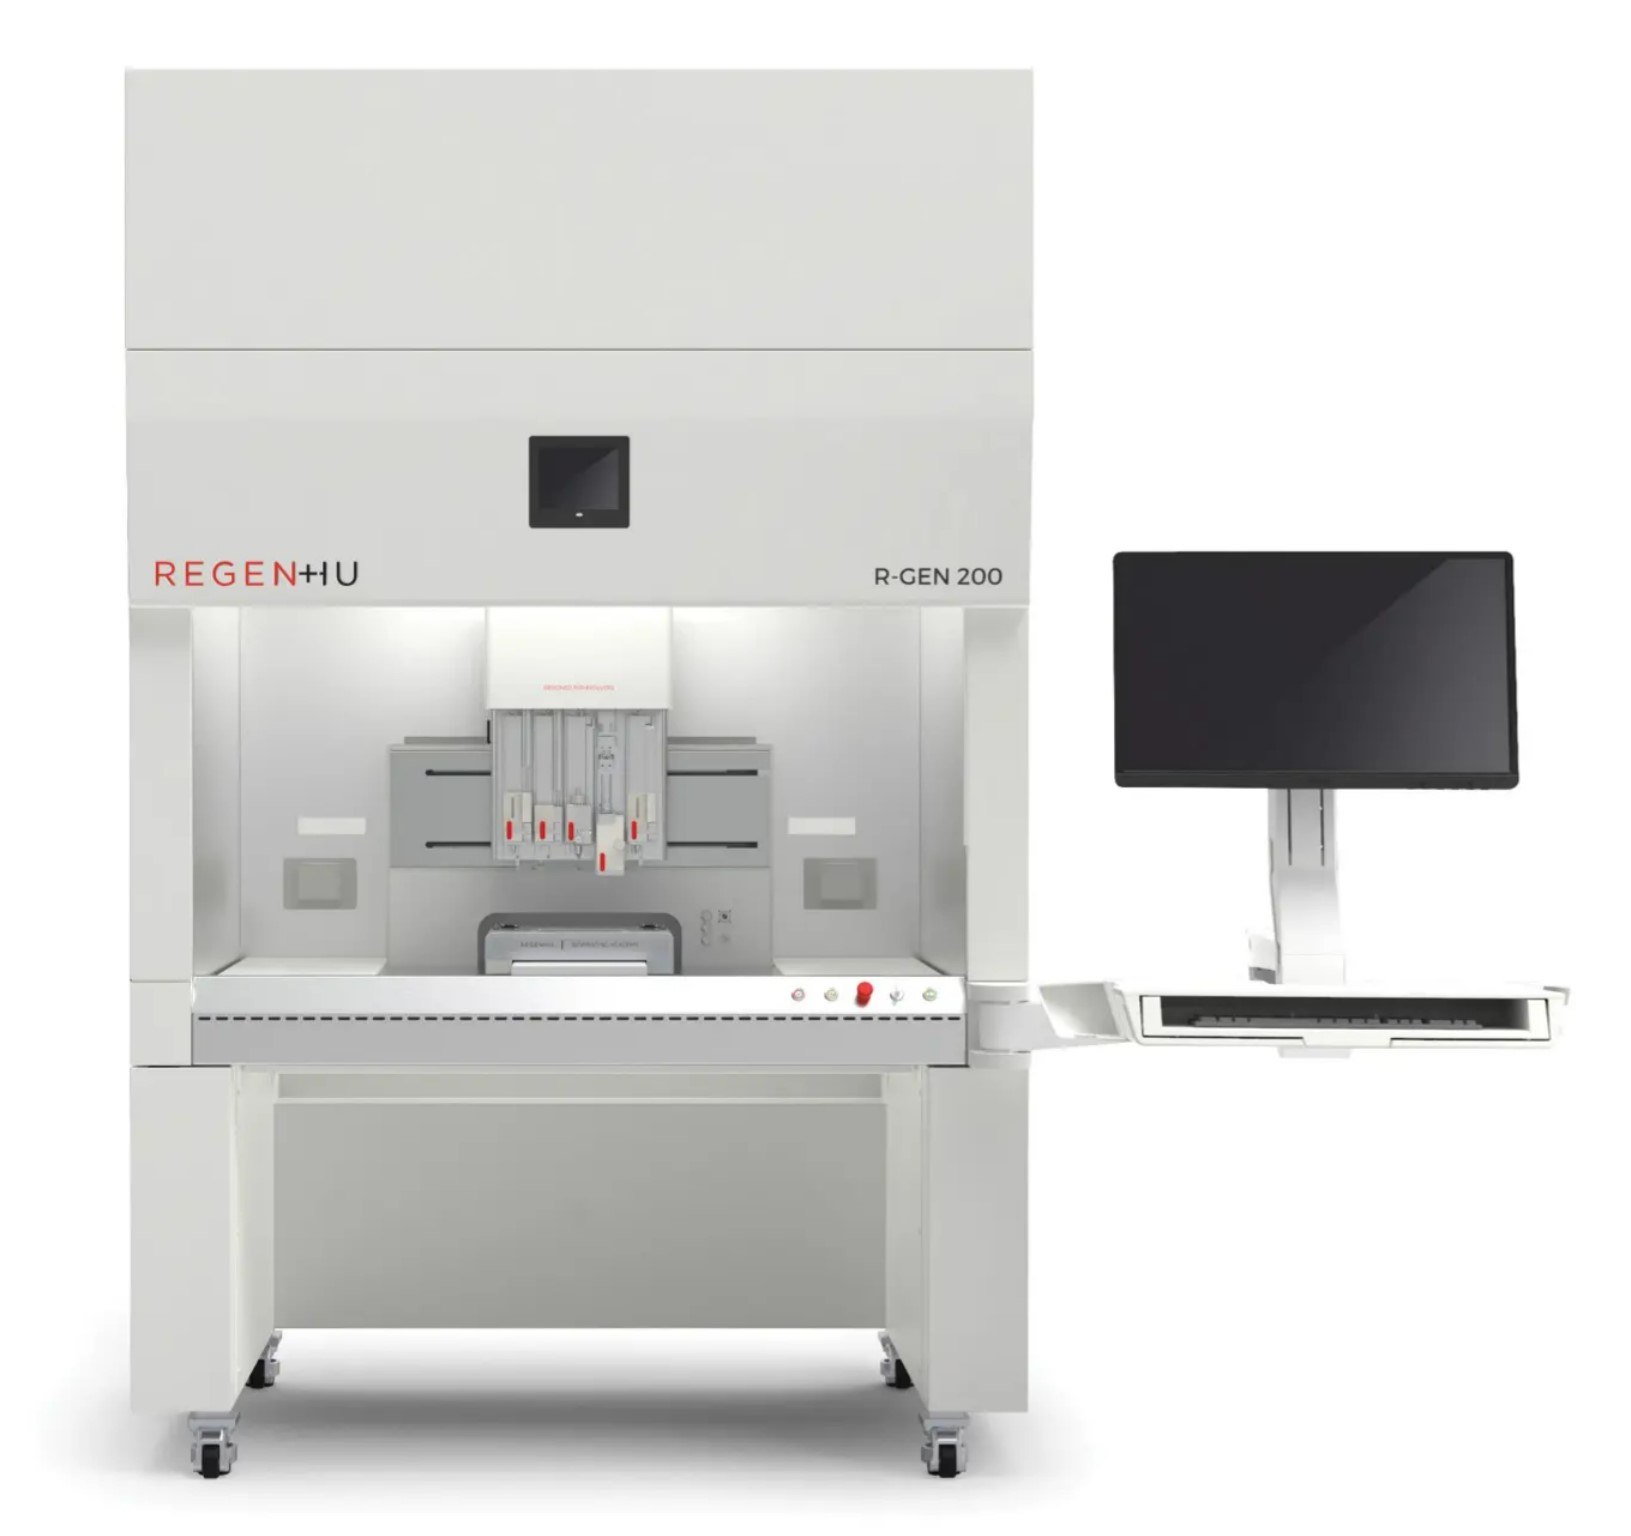 regenHU R-GEN 200 bioprinting station